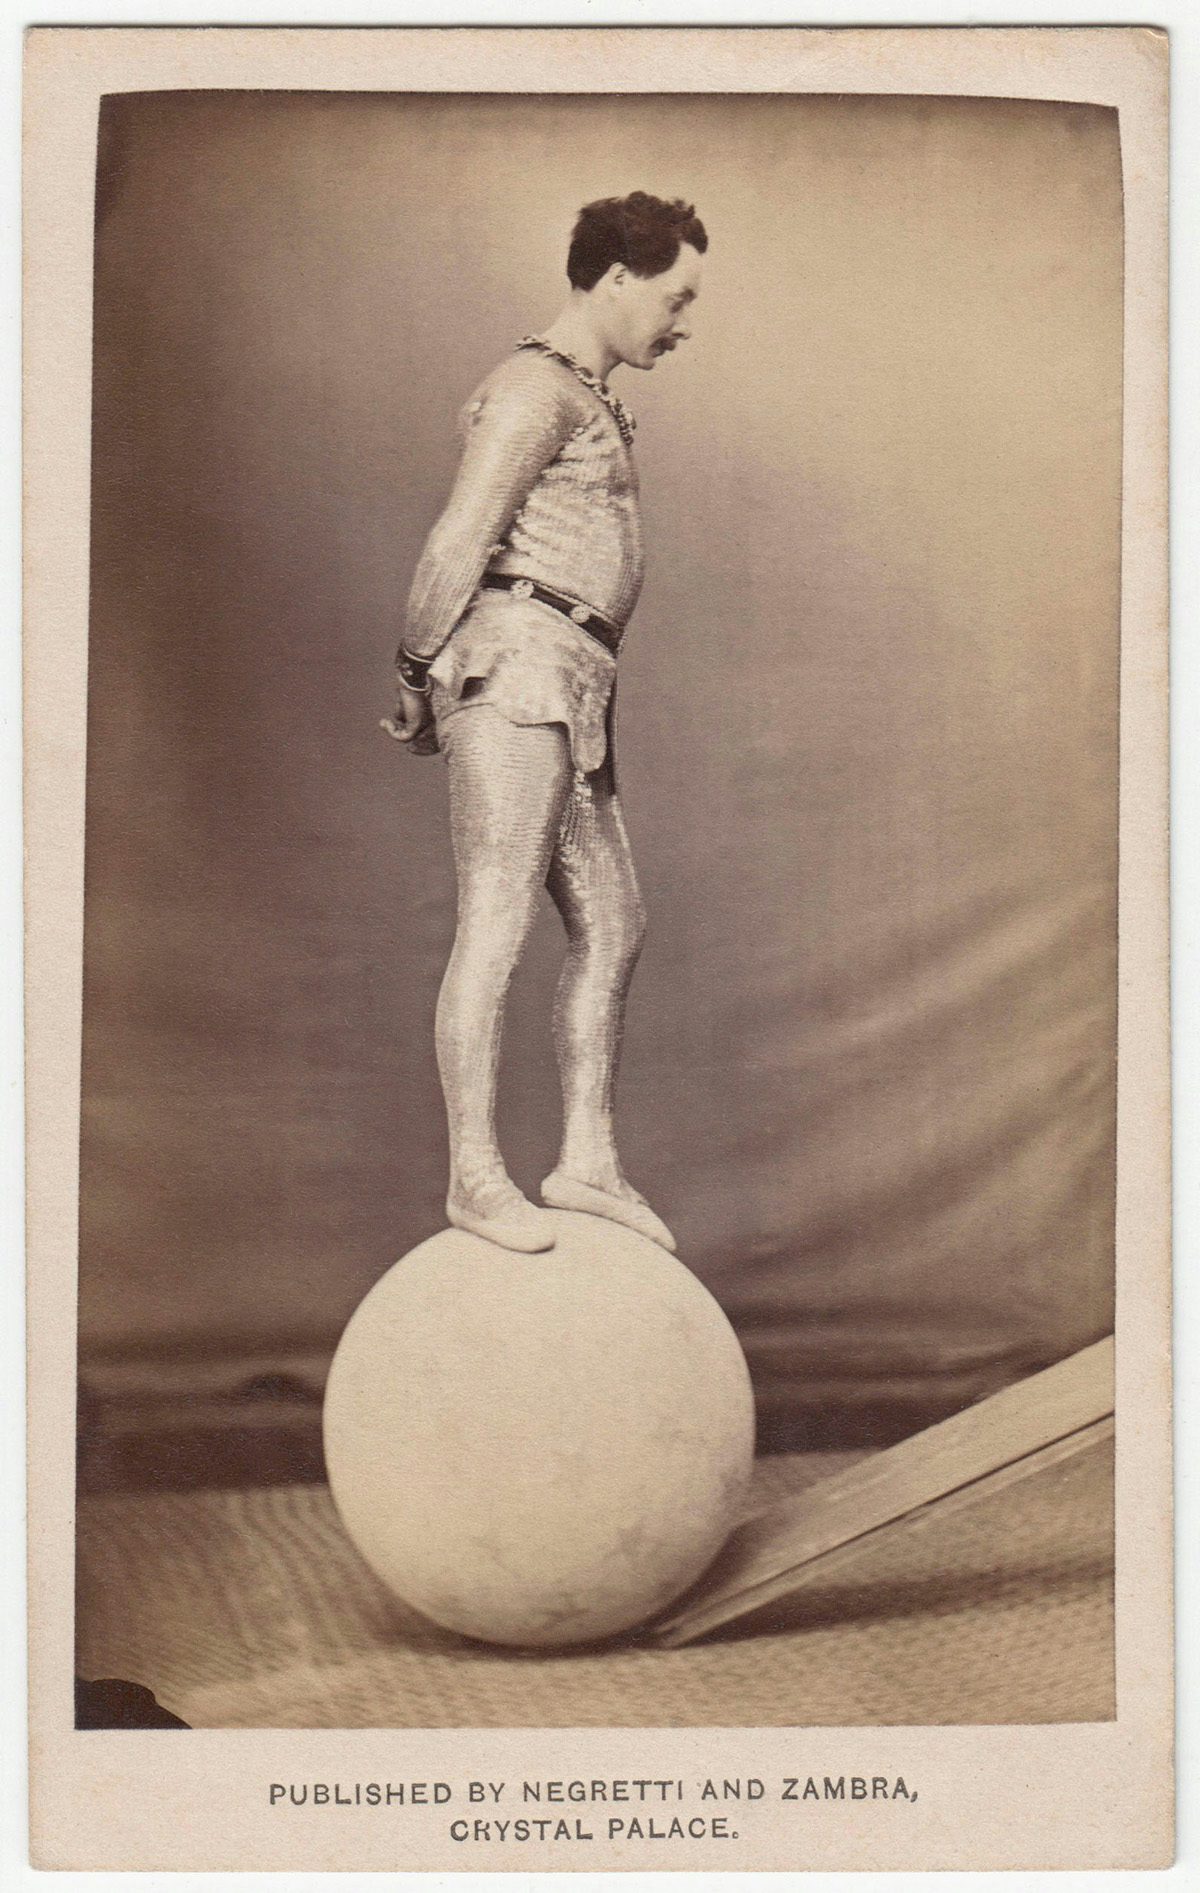 Sepia toned photo of a gymnast balanced on a large ball